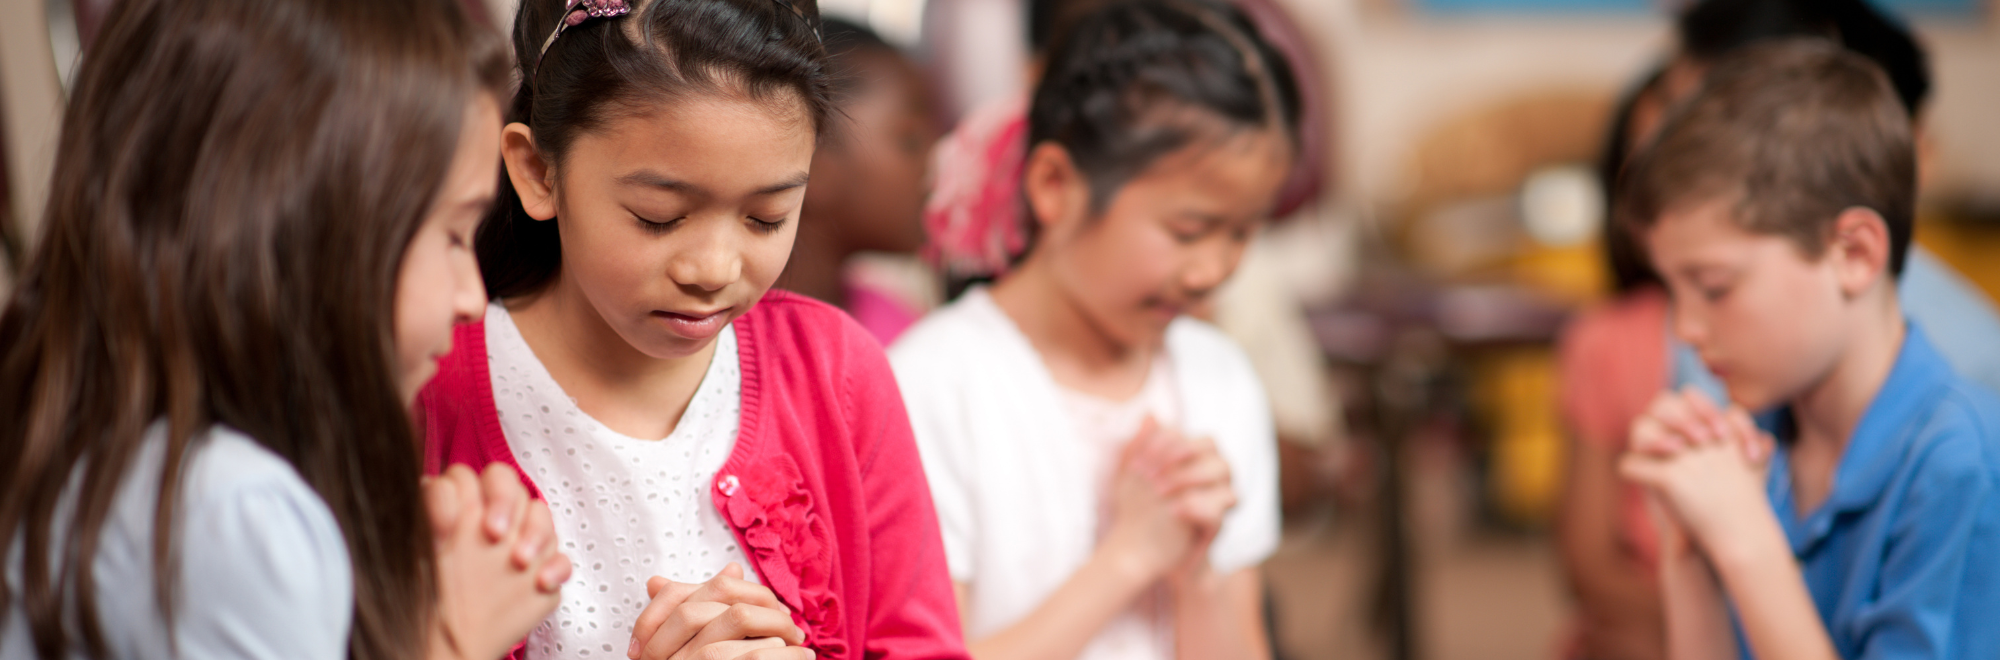 Young schoolchildren in elementary school praying.